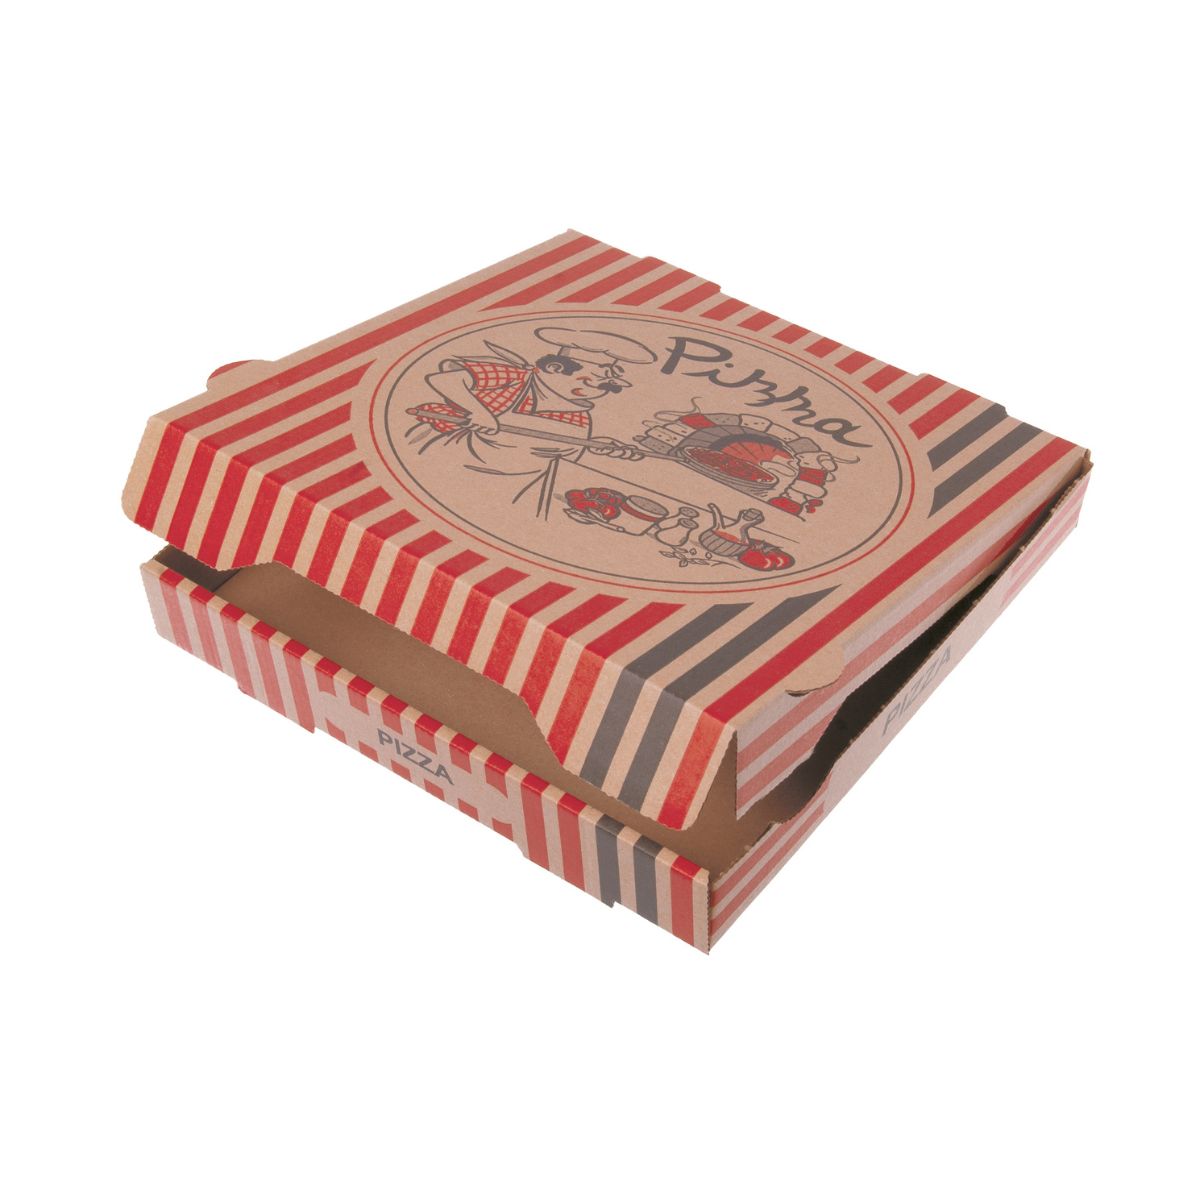 Pizzabox 29x29x4cm | Kraft rot-braun